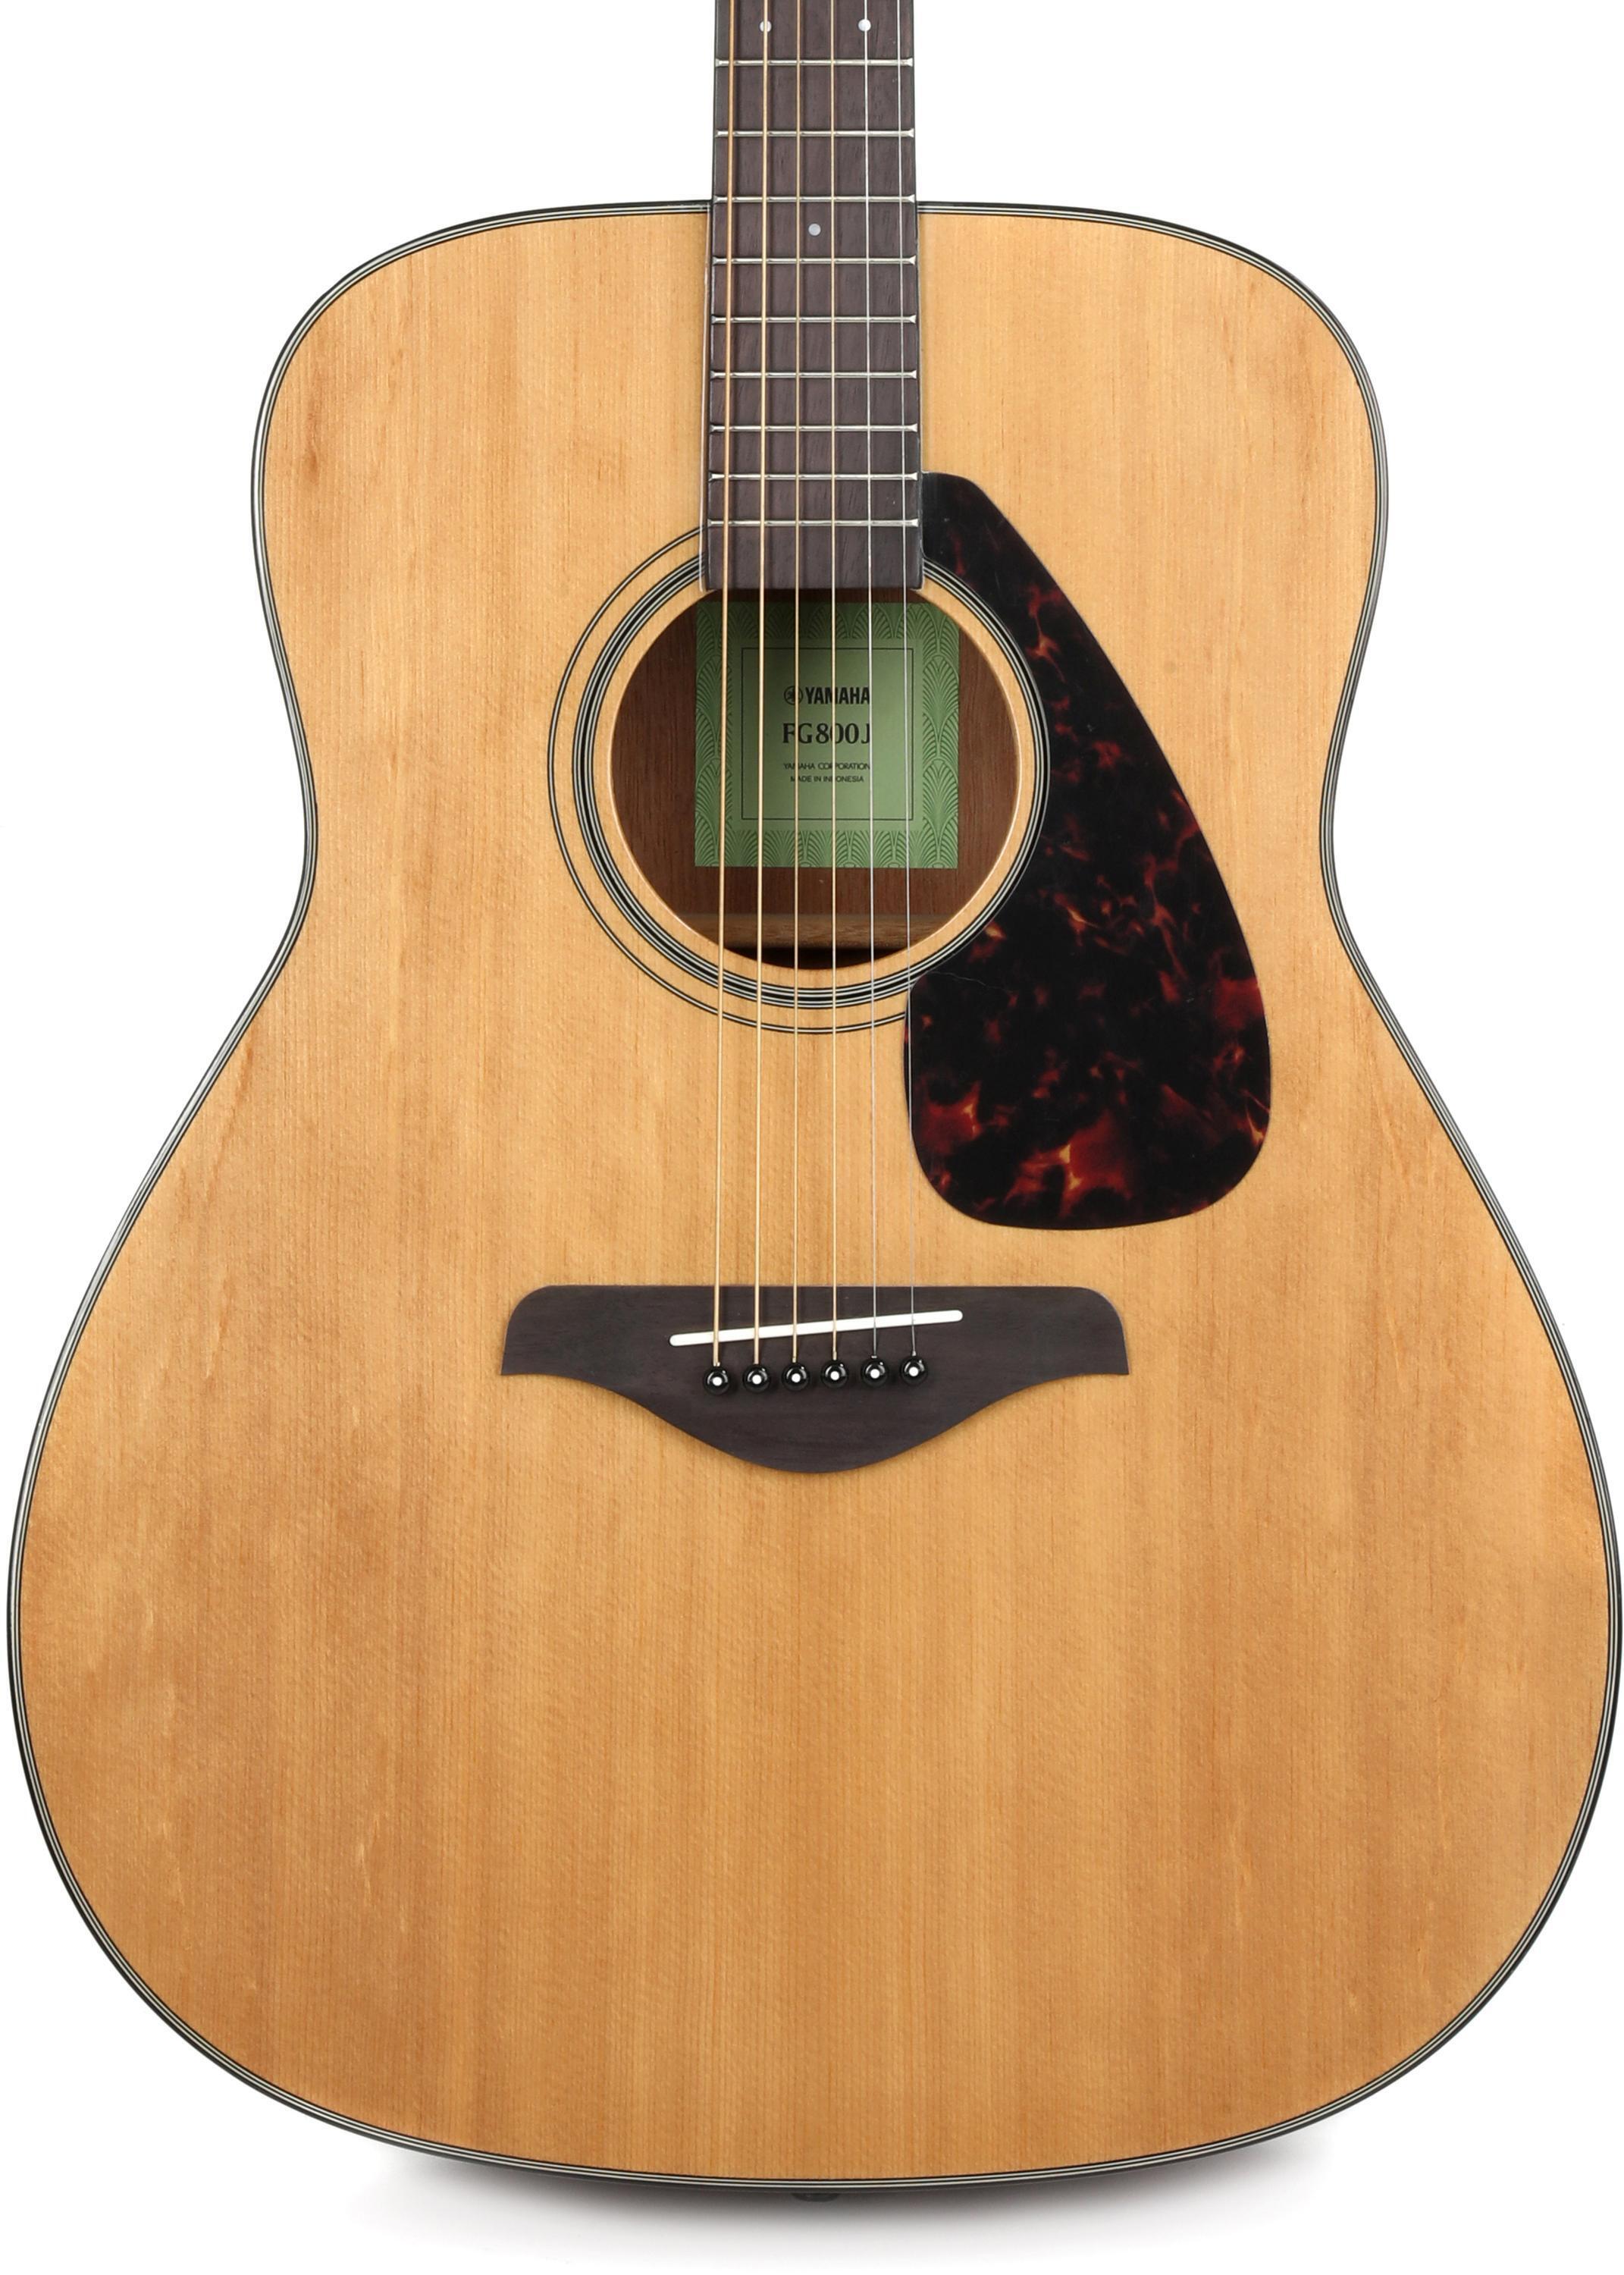 Bundled Item: Yamaha FG800J Acoustic Guitar - Natural